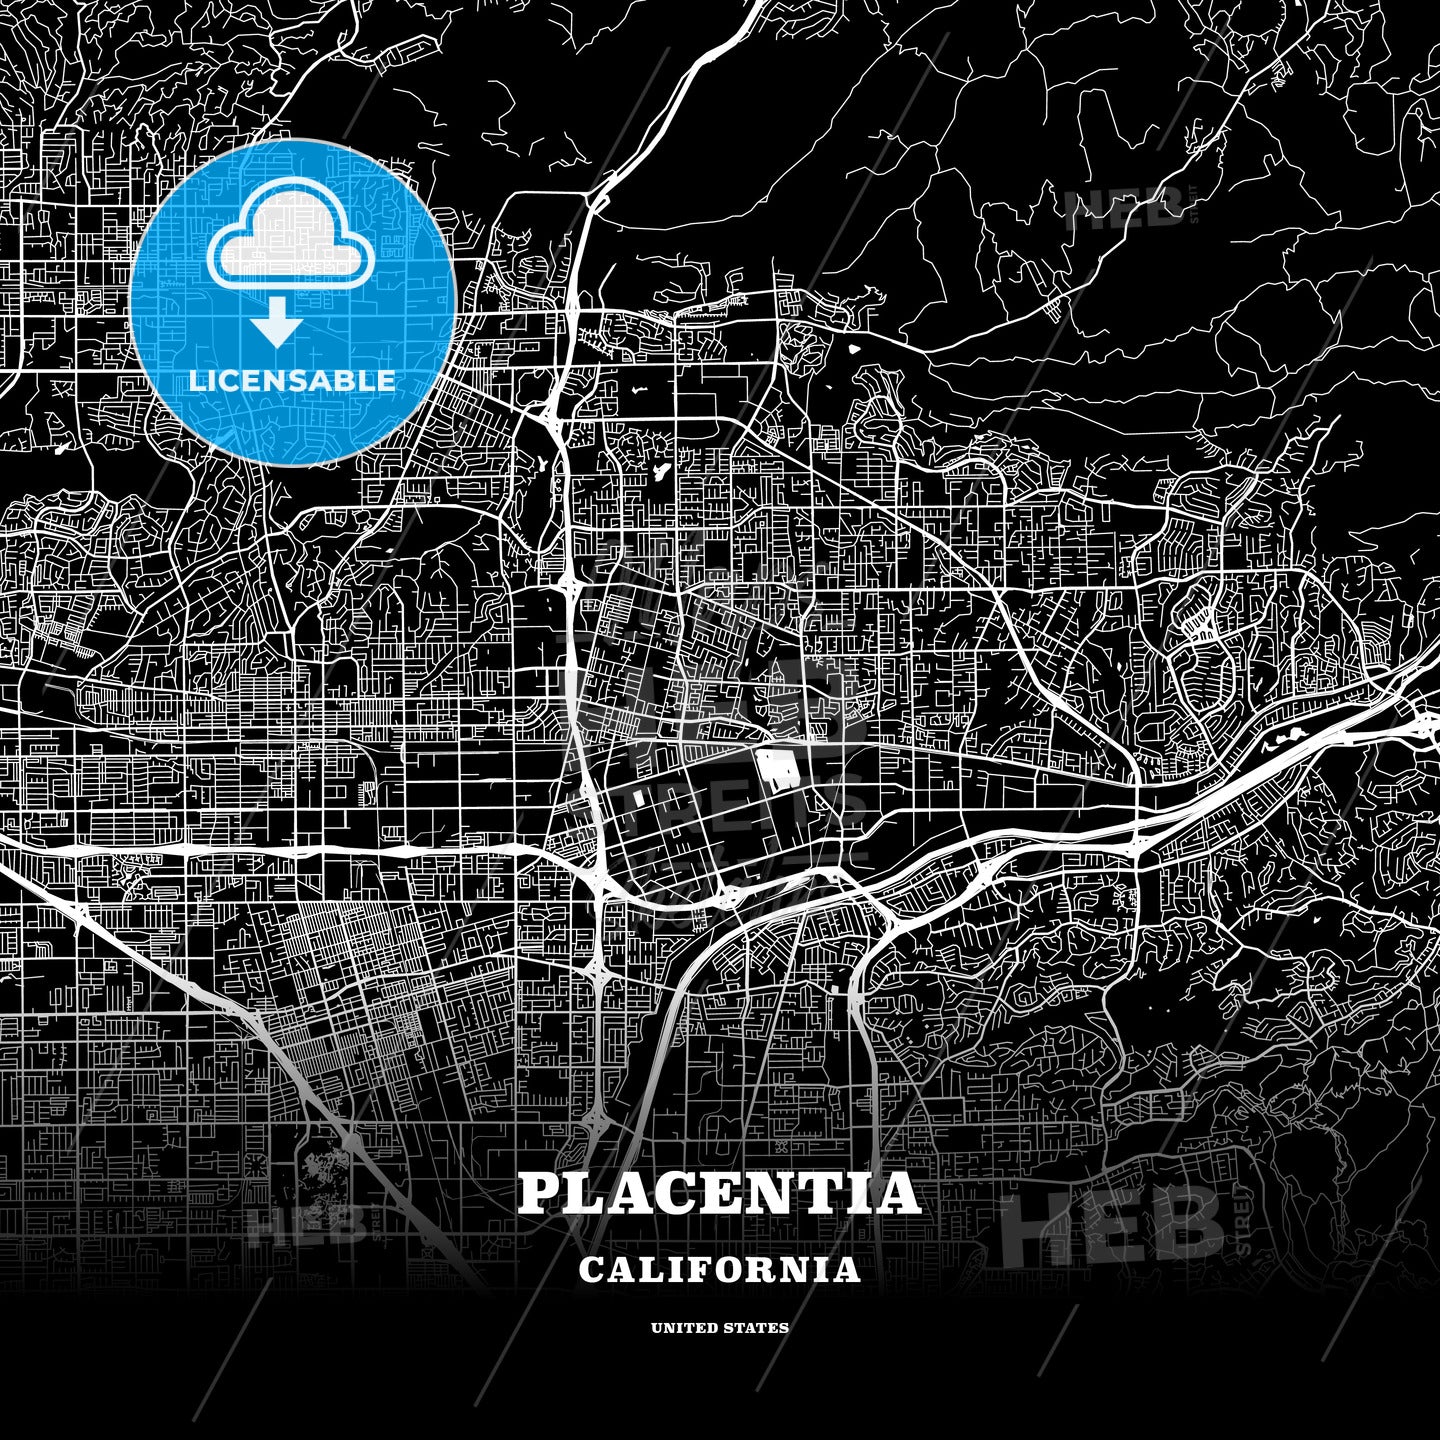 Placentia, California, USA map